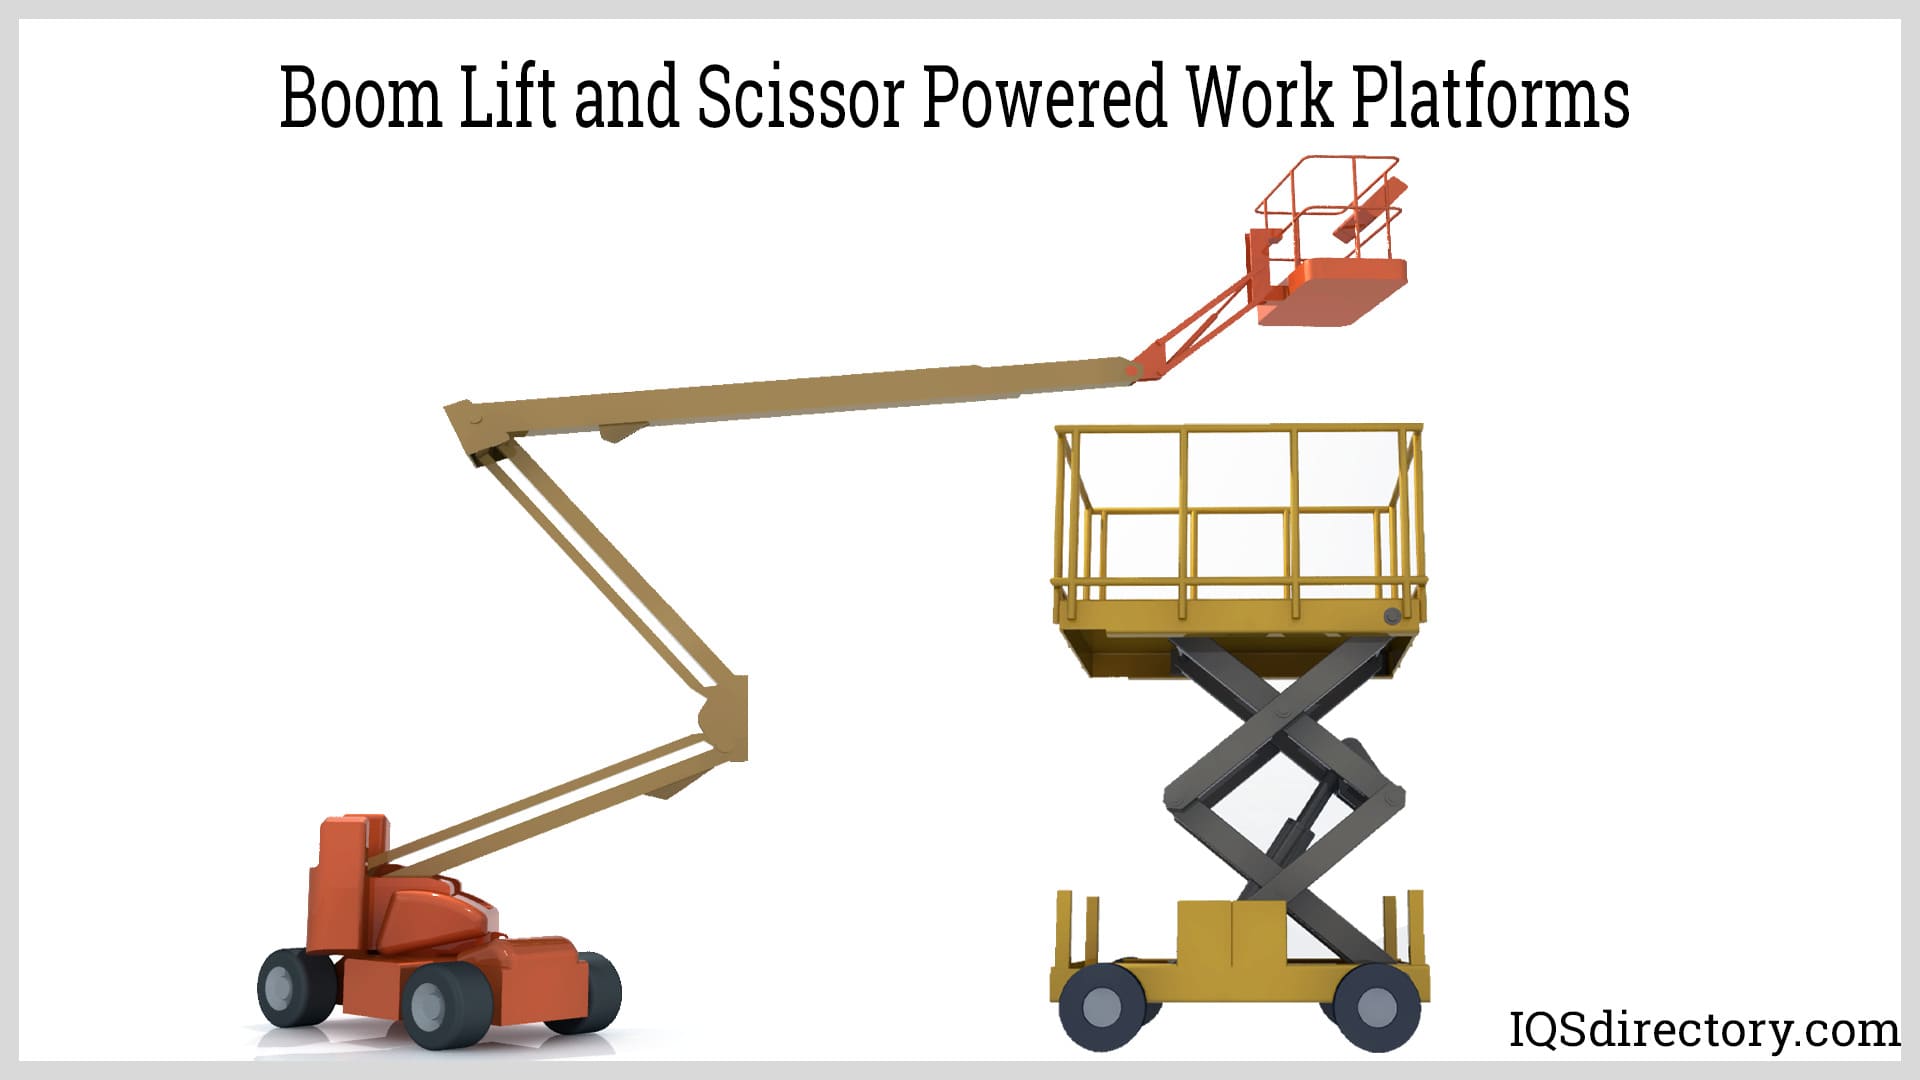 Boom Lift and Scissor Powered Work Platforms